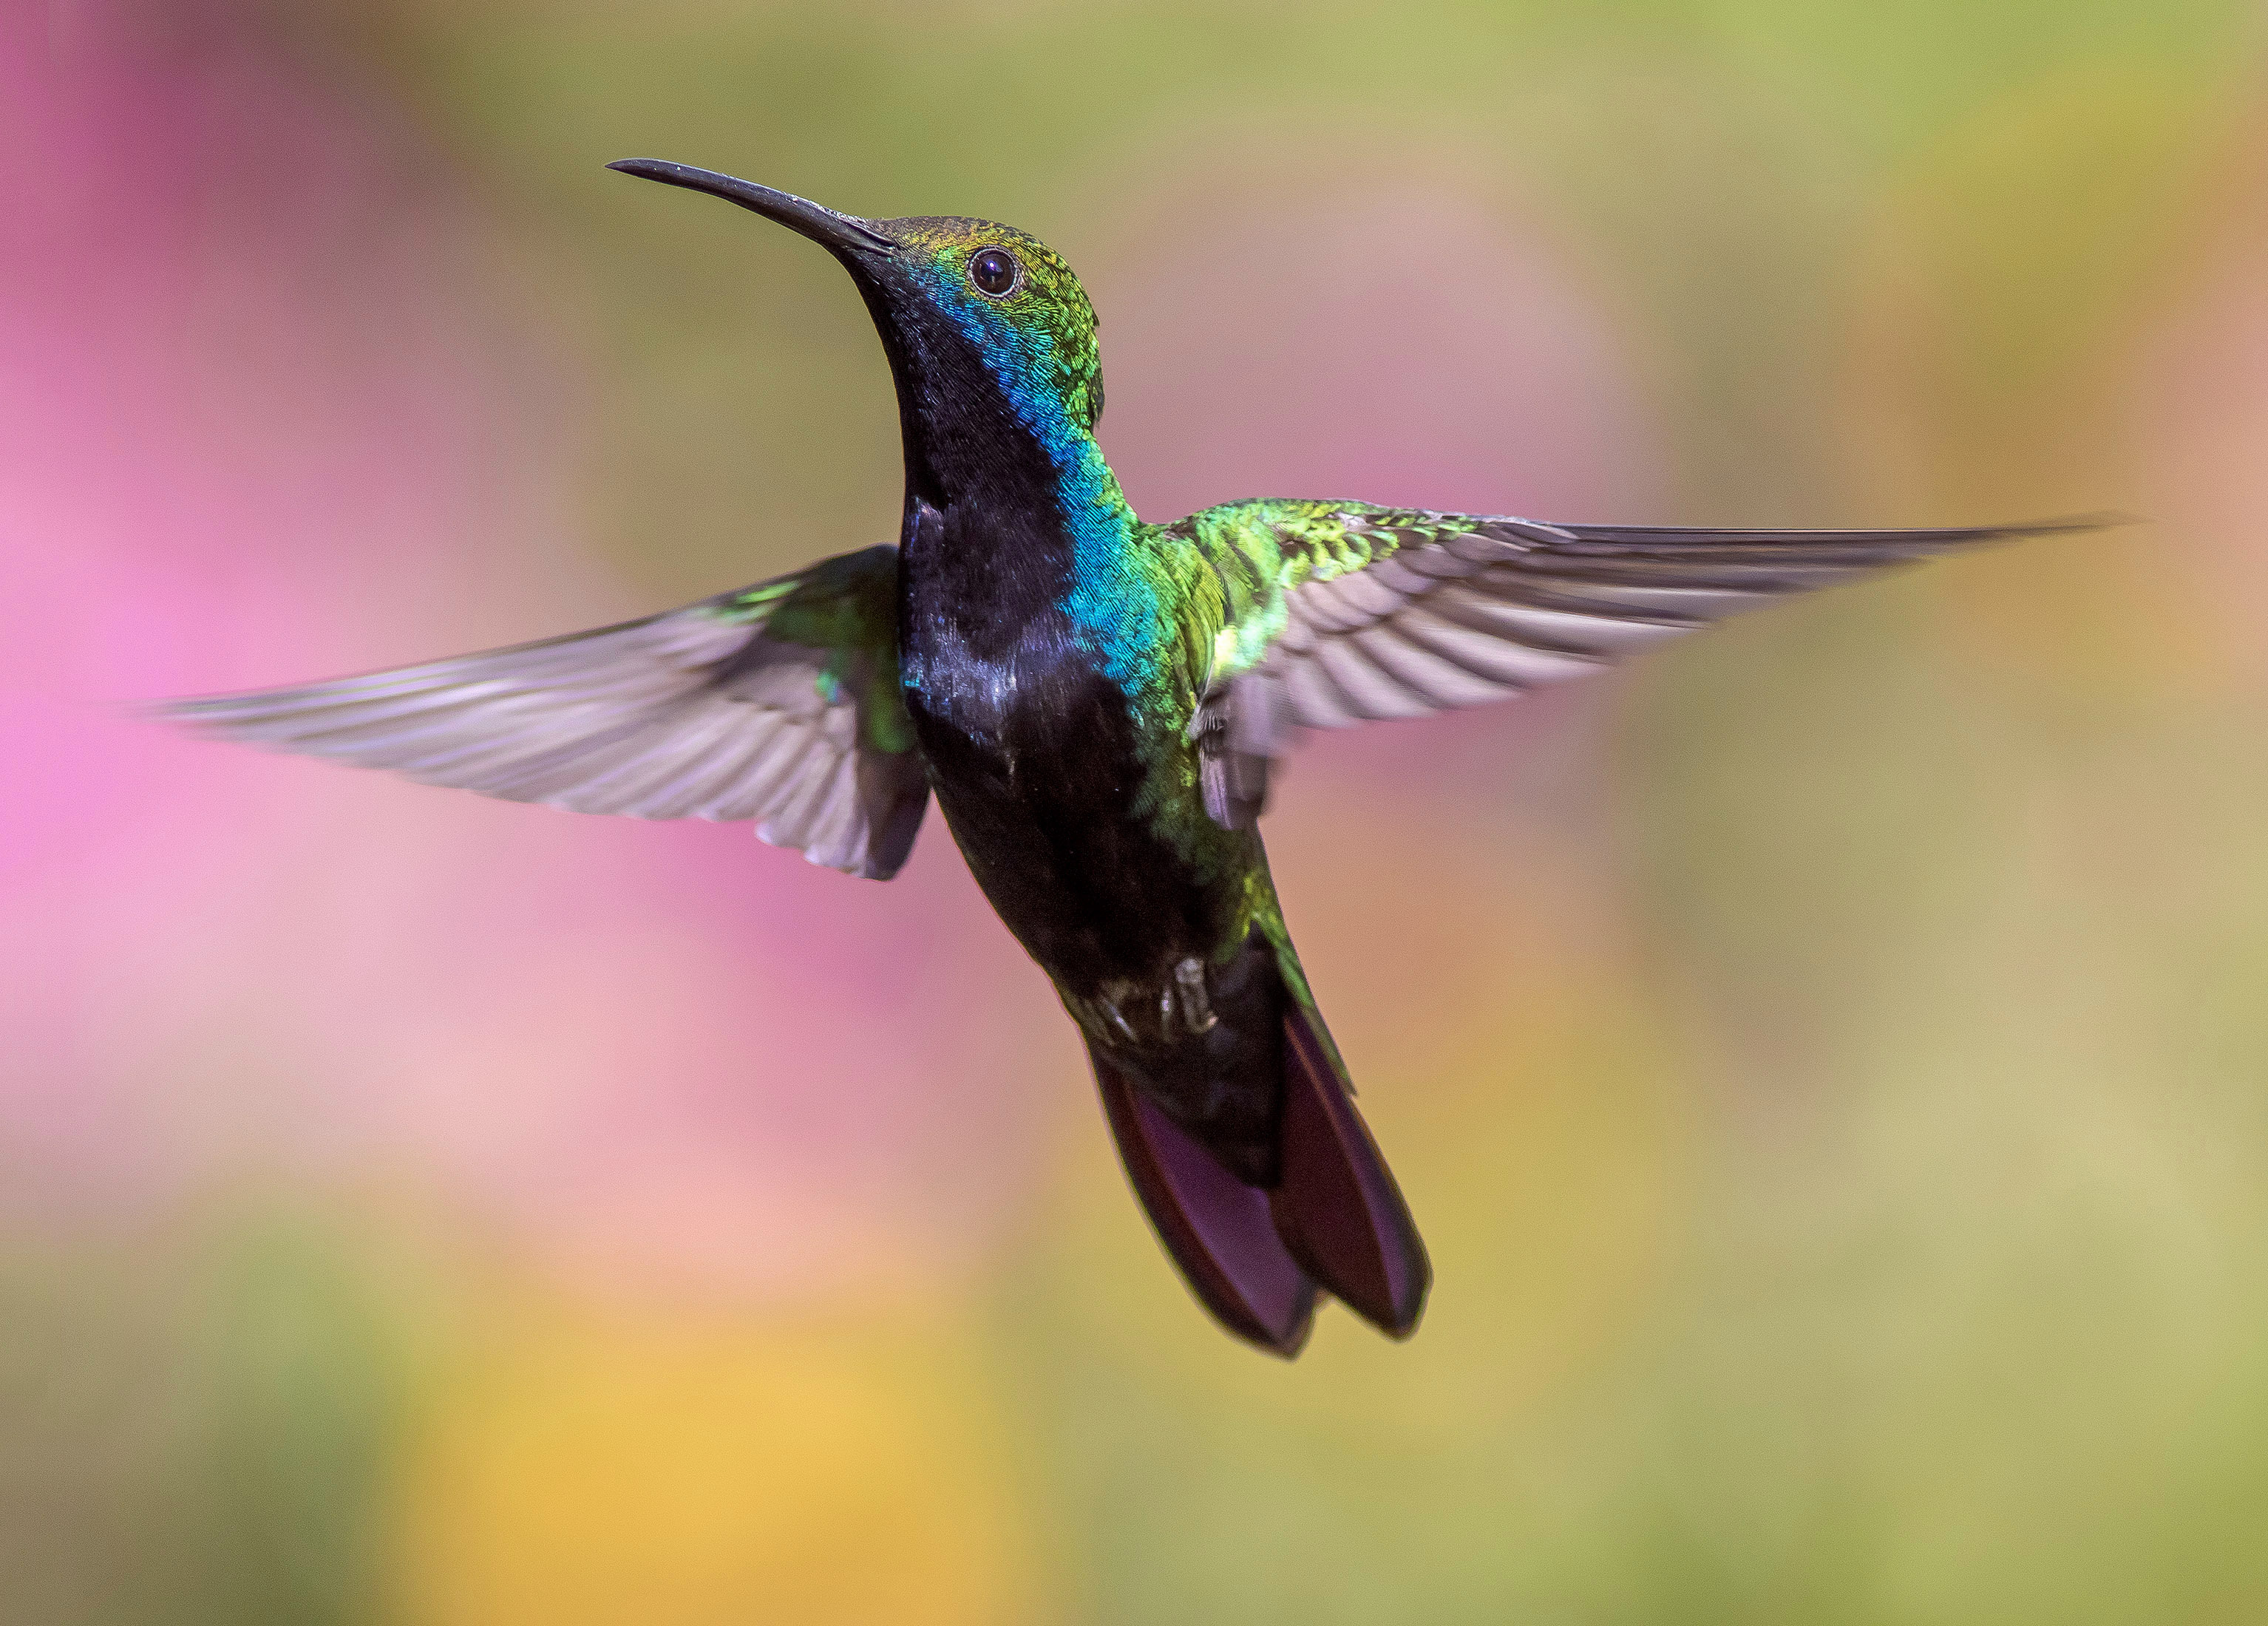 Hummingbird in Flight: Photo from Pexels